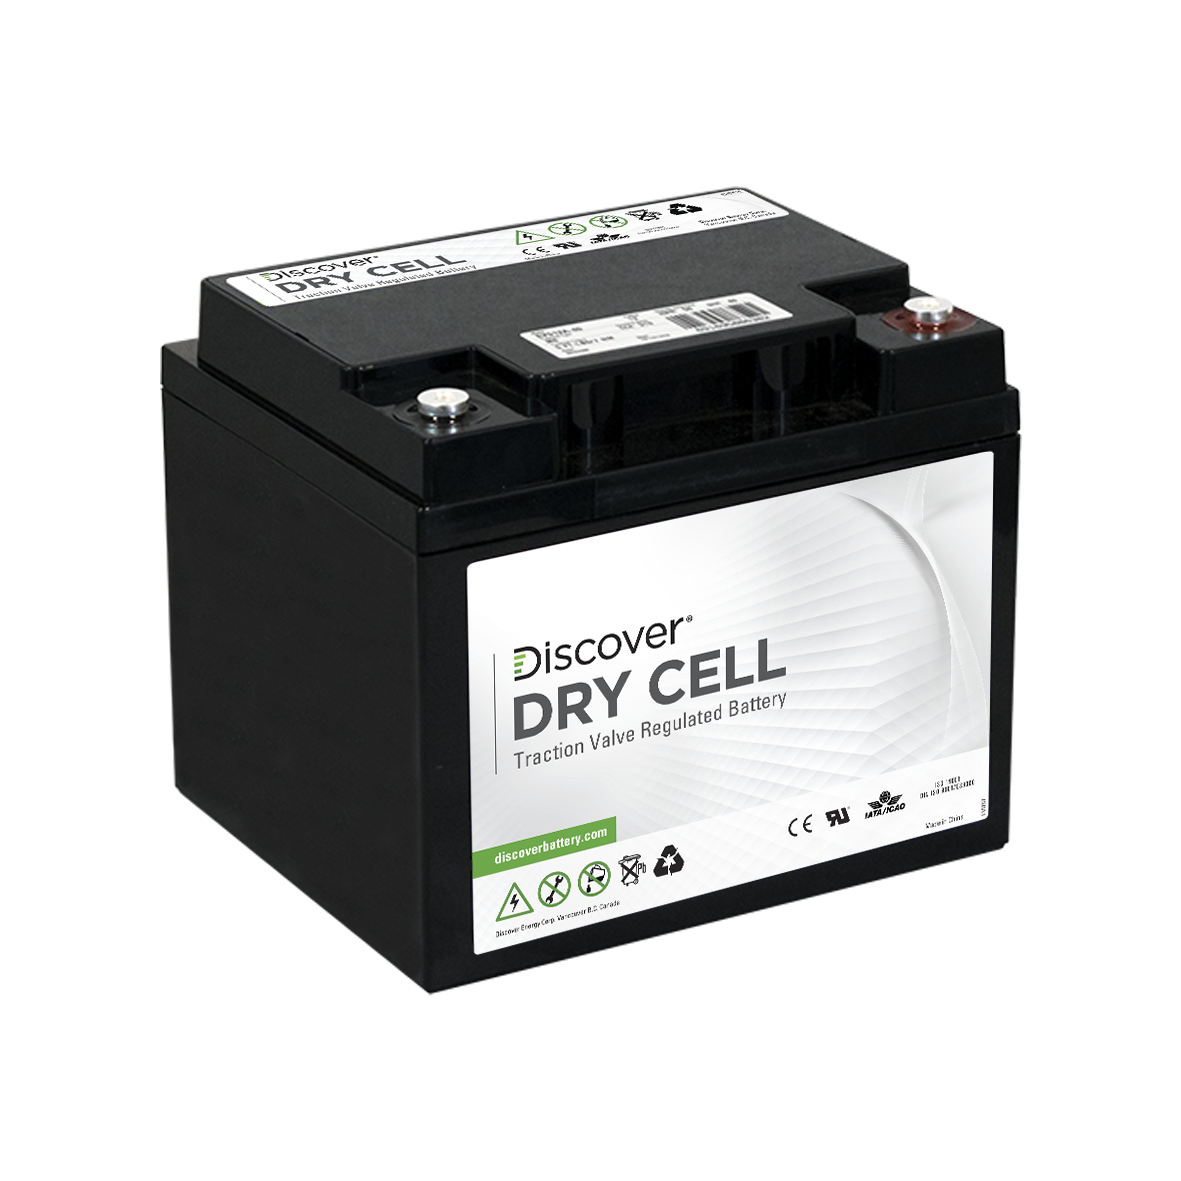 Cell battery. Аккумуляторы Dry Cell. Discover аккумулятор. Аккумулятор ABS. Аккумулятор ABS 90.